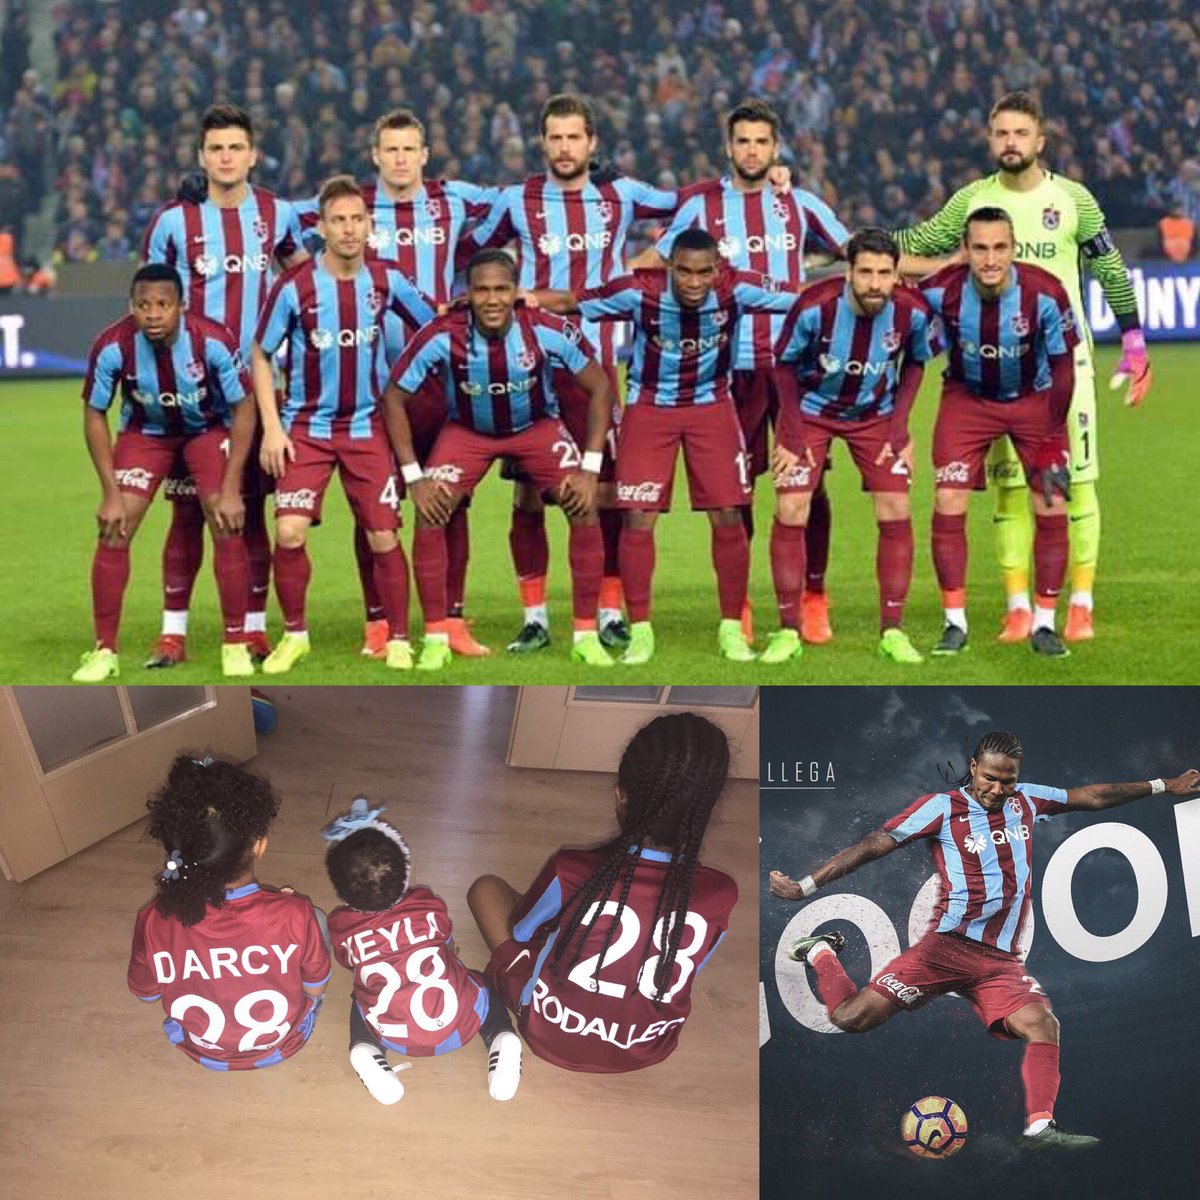 HAPPY BIRTHDAY 🎉 @Trabzonspor 
# gururvezaferdolu50yıl
 #iyikivarsıntrabzonspor  FELIZ CUMPLEAÑOS 🎉 BIZE HER YER TRABZON ⚽️⚽️🔴🔵